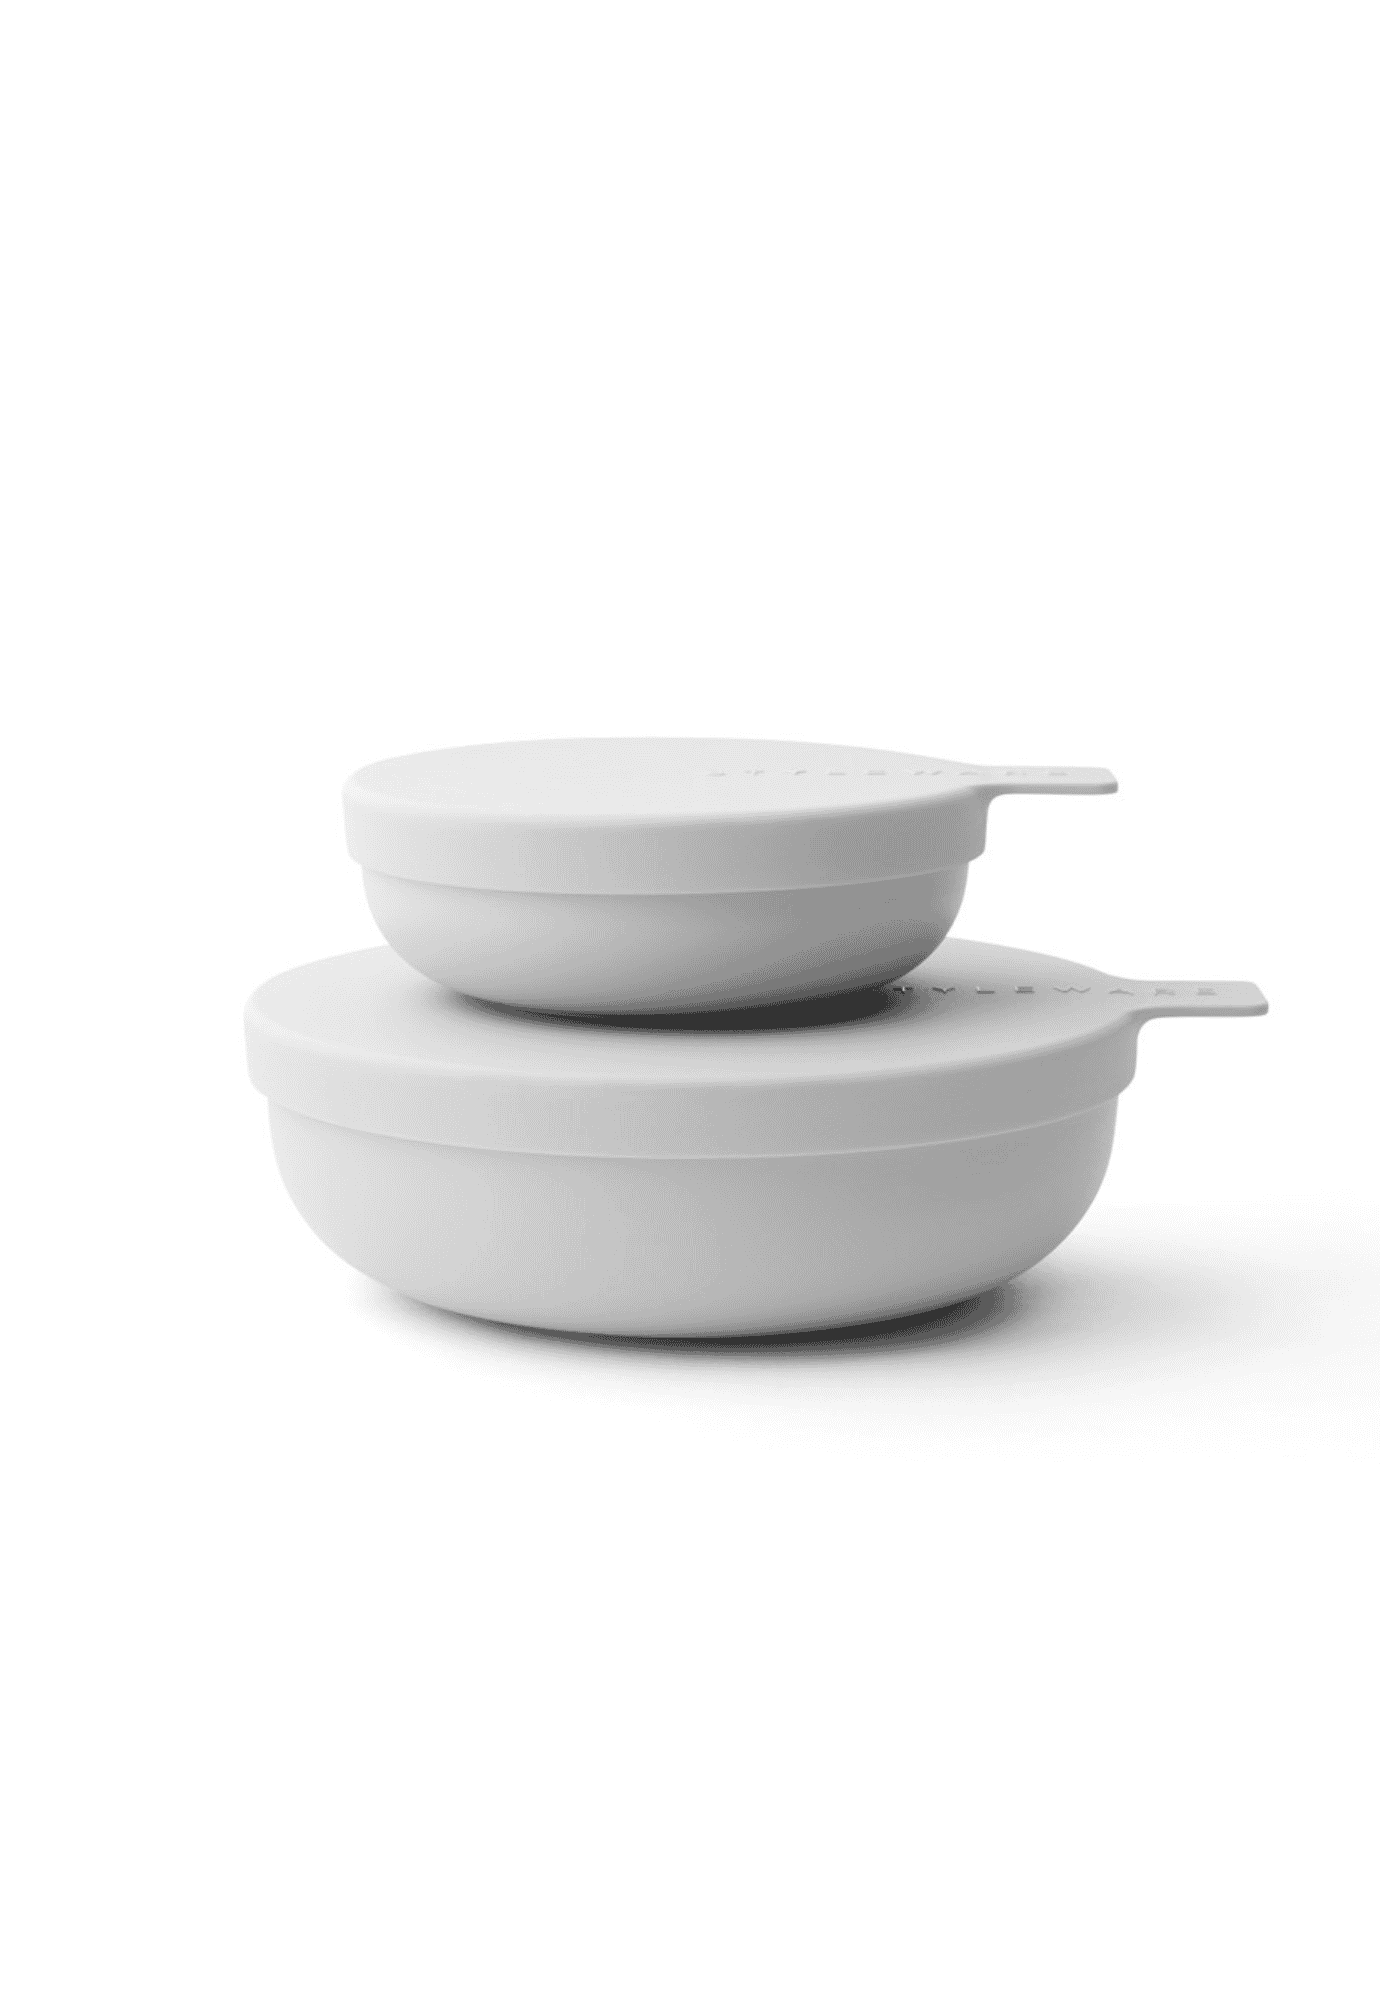 styleware - 2 piece nesting bowls